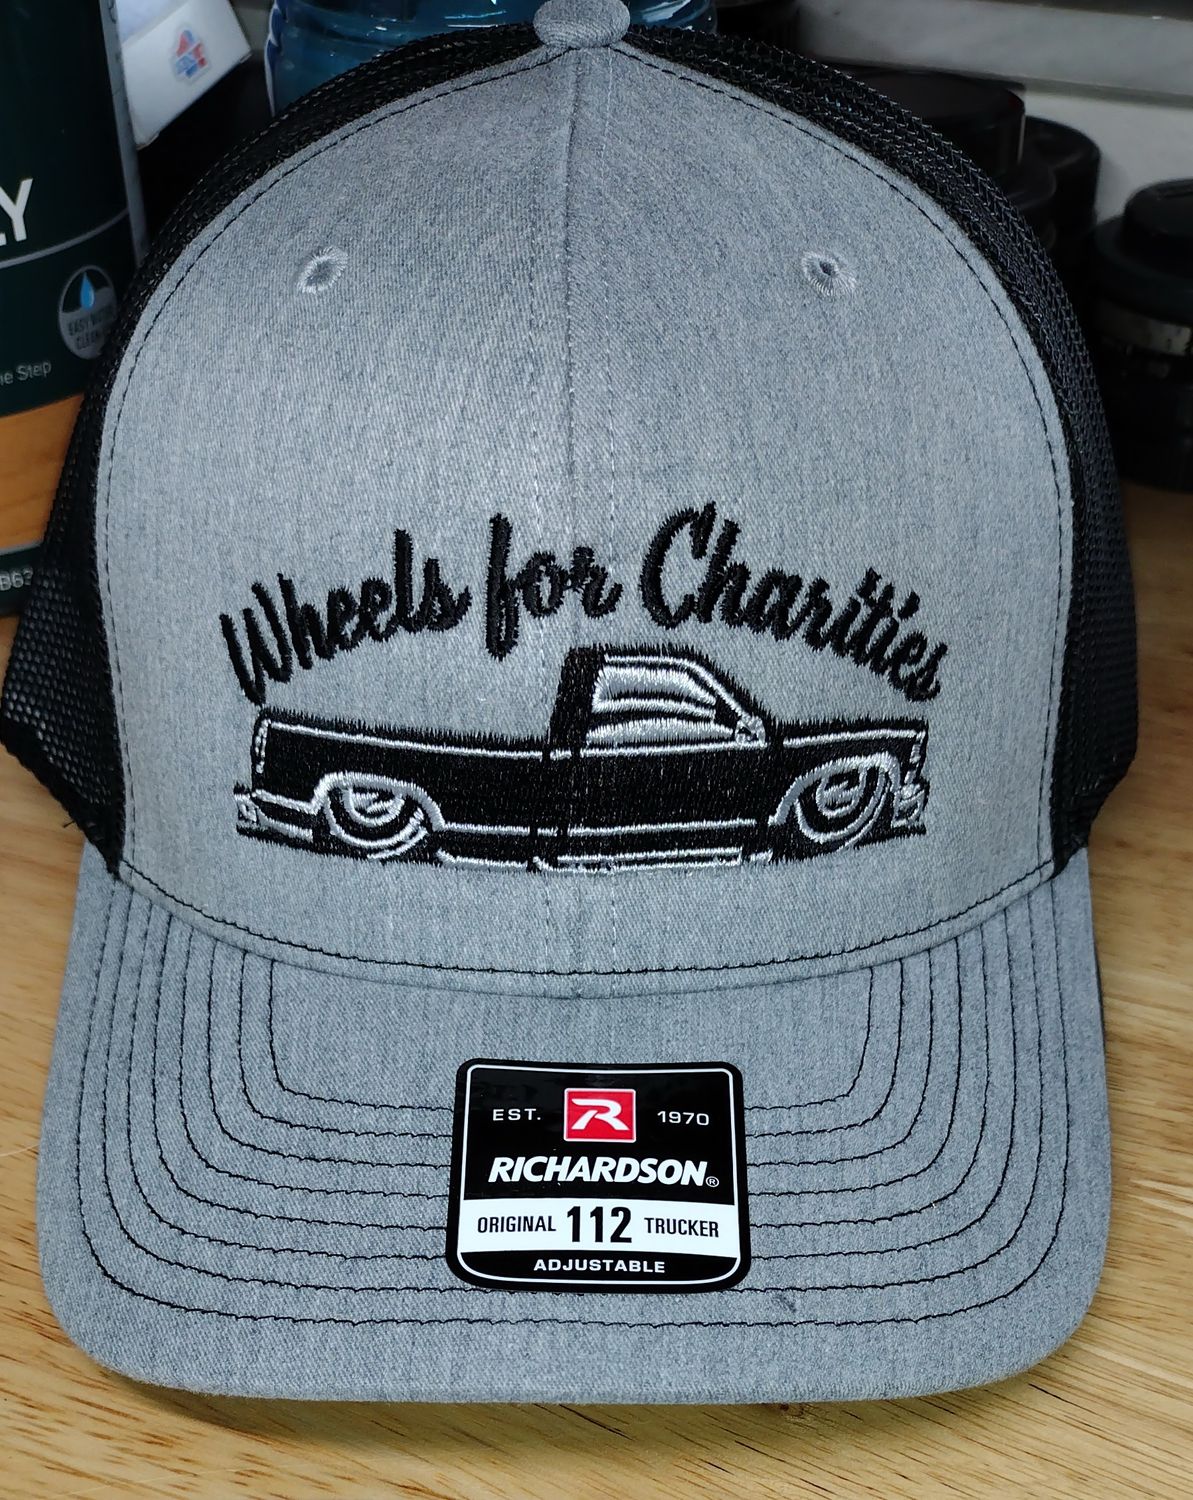 Richardson 112 &quot;Wheels for Charities&quot; hat